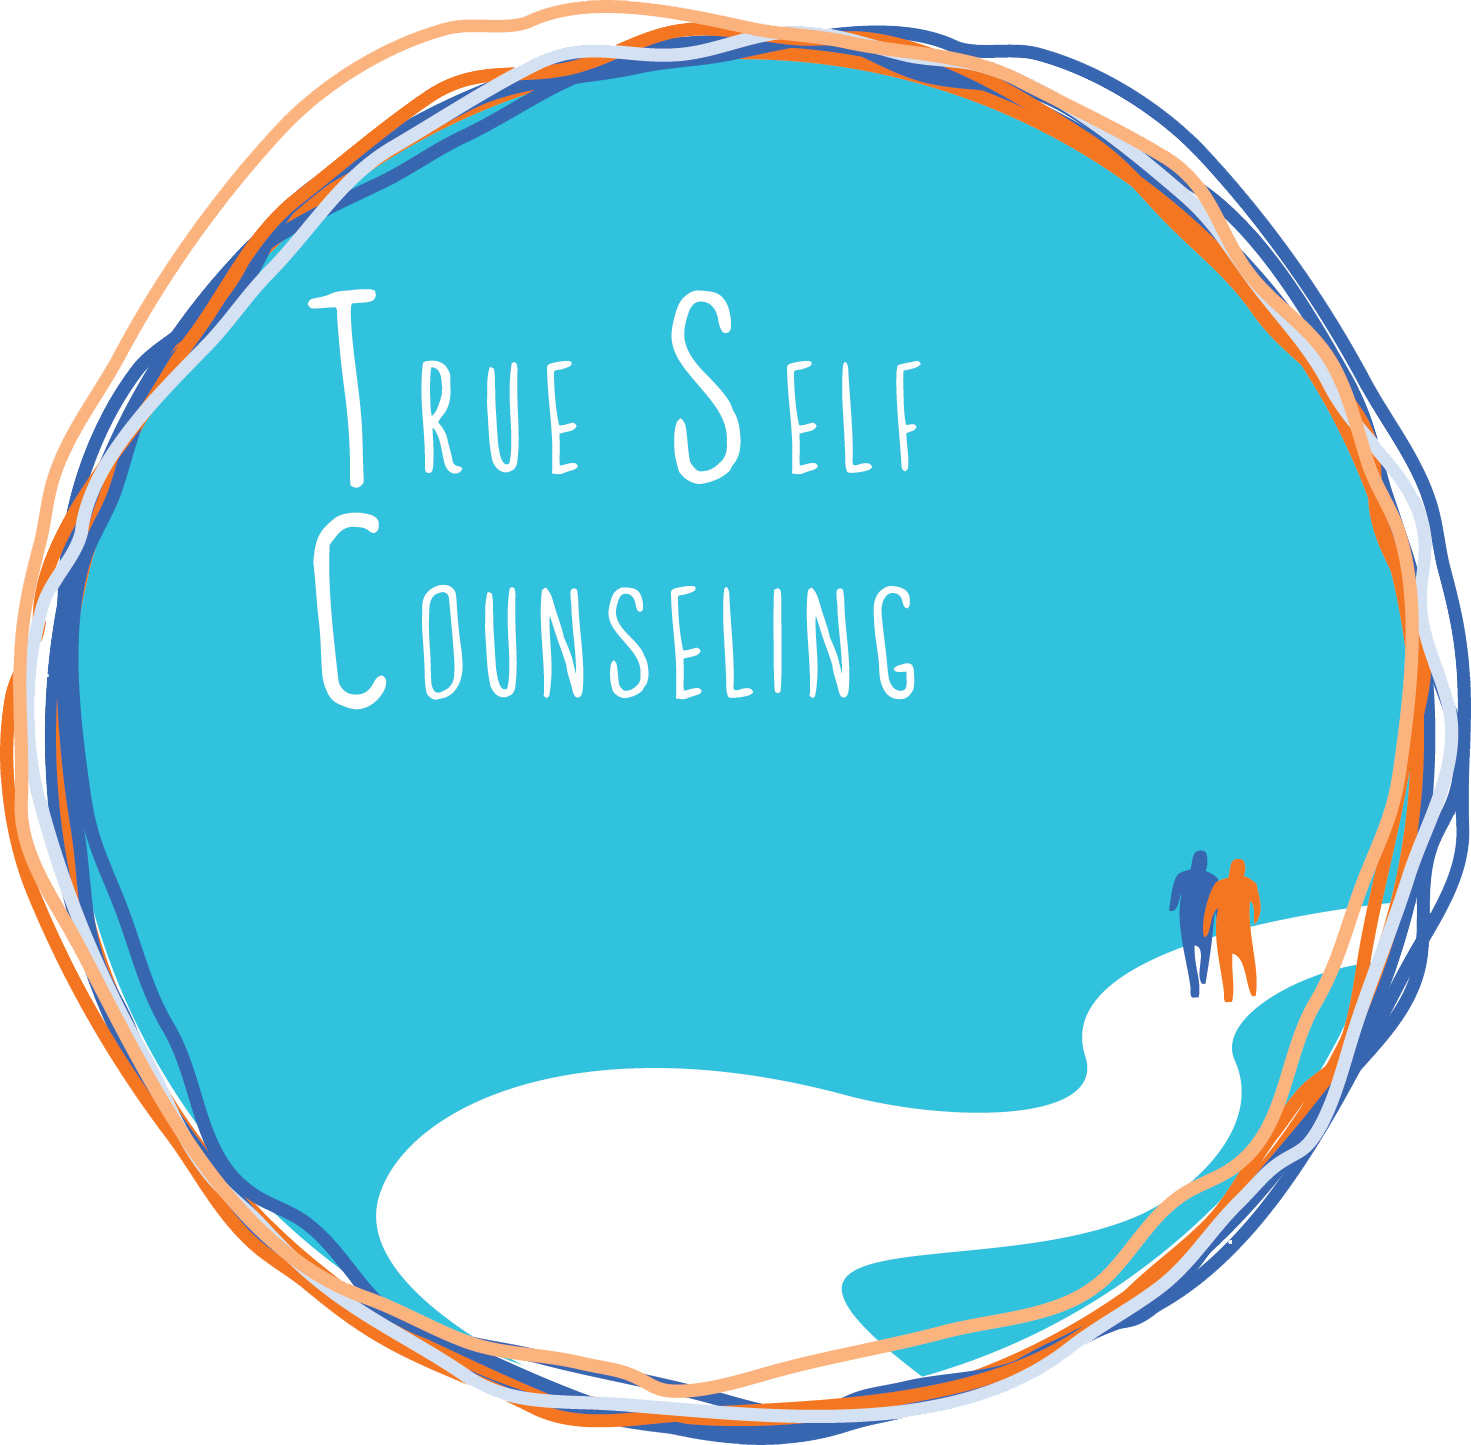 True Self Counseling